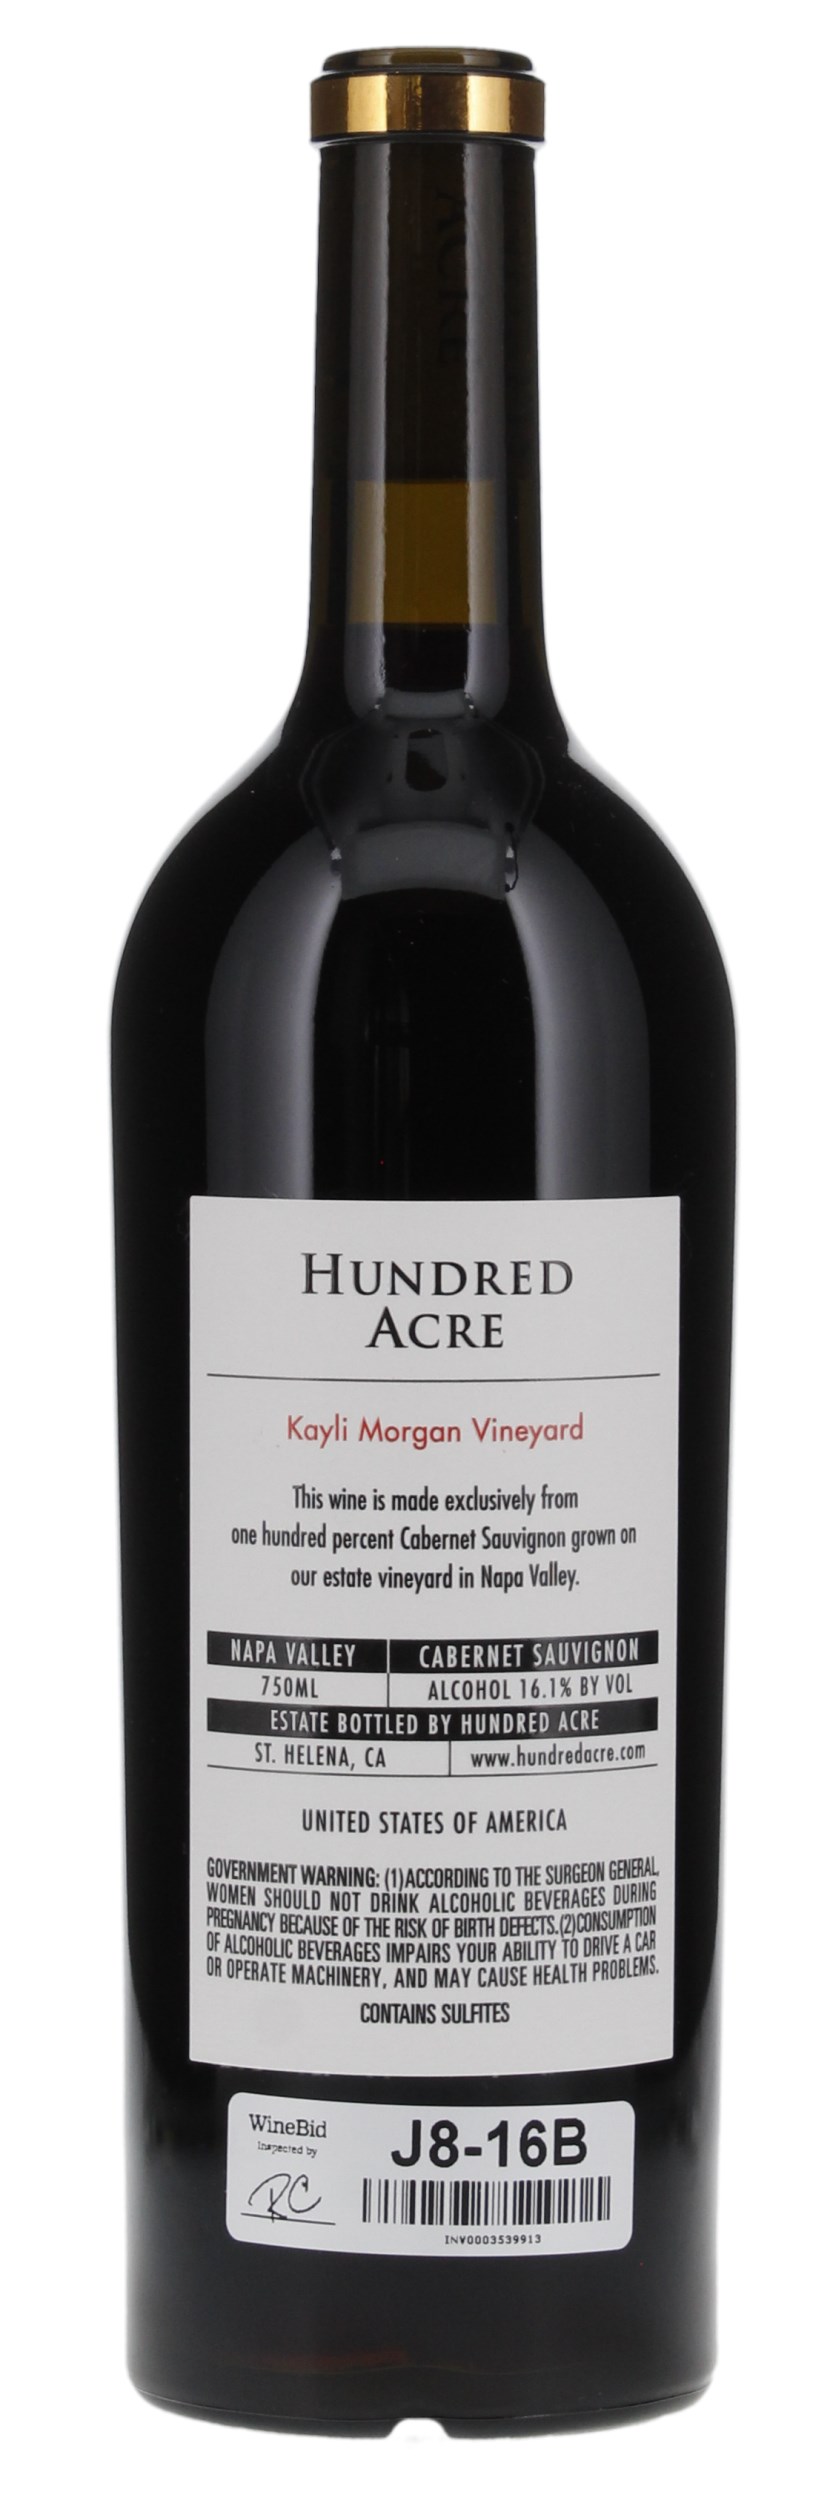 2017 Hundred Acre Kayli Morgan Vineyard Cabernet Sauvignon, 750ml